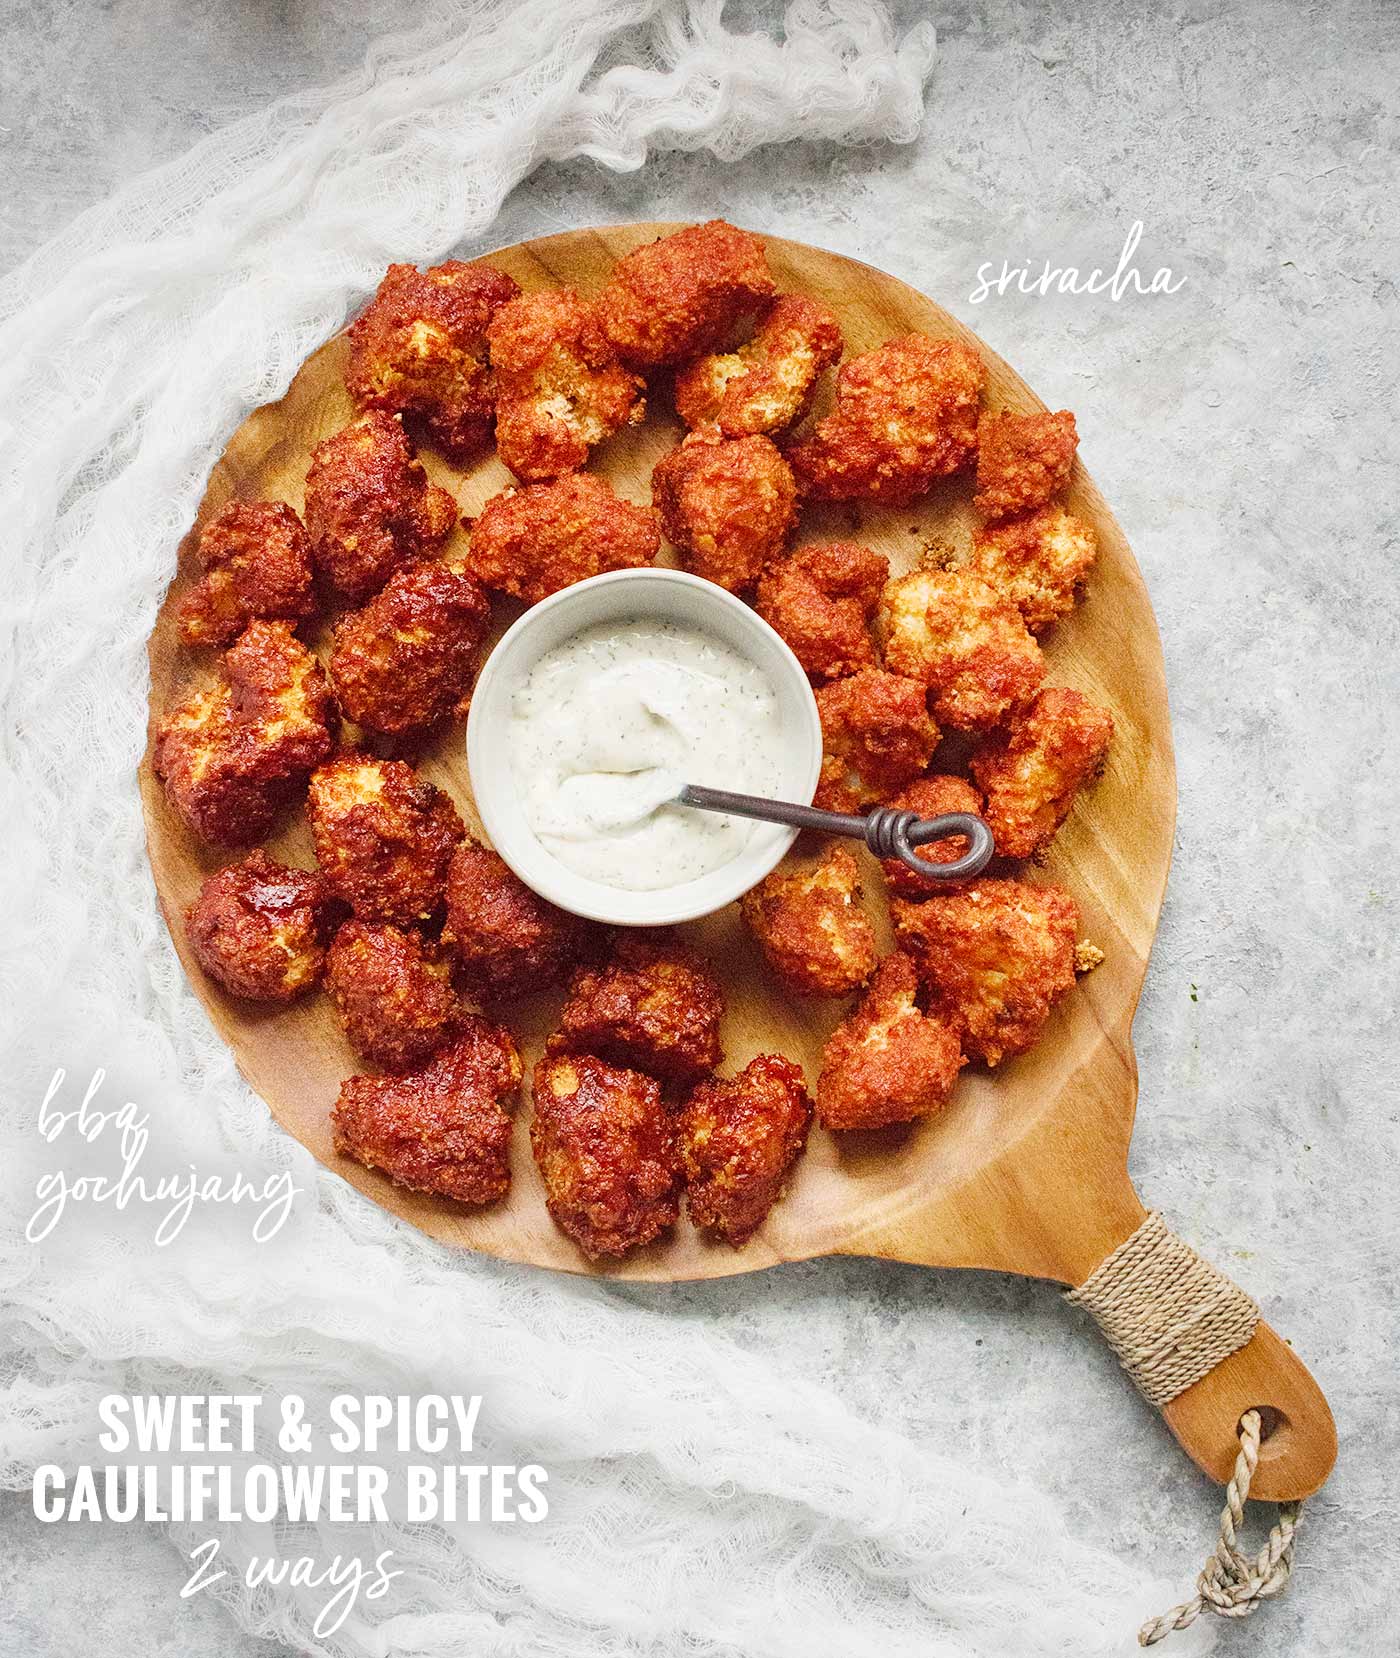 Sweet & Spicy Cauliflower Bites - Two Ways - Recipe at SoupAddict.com